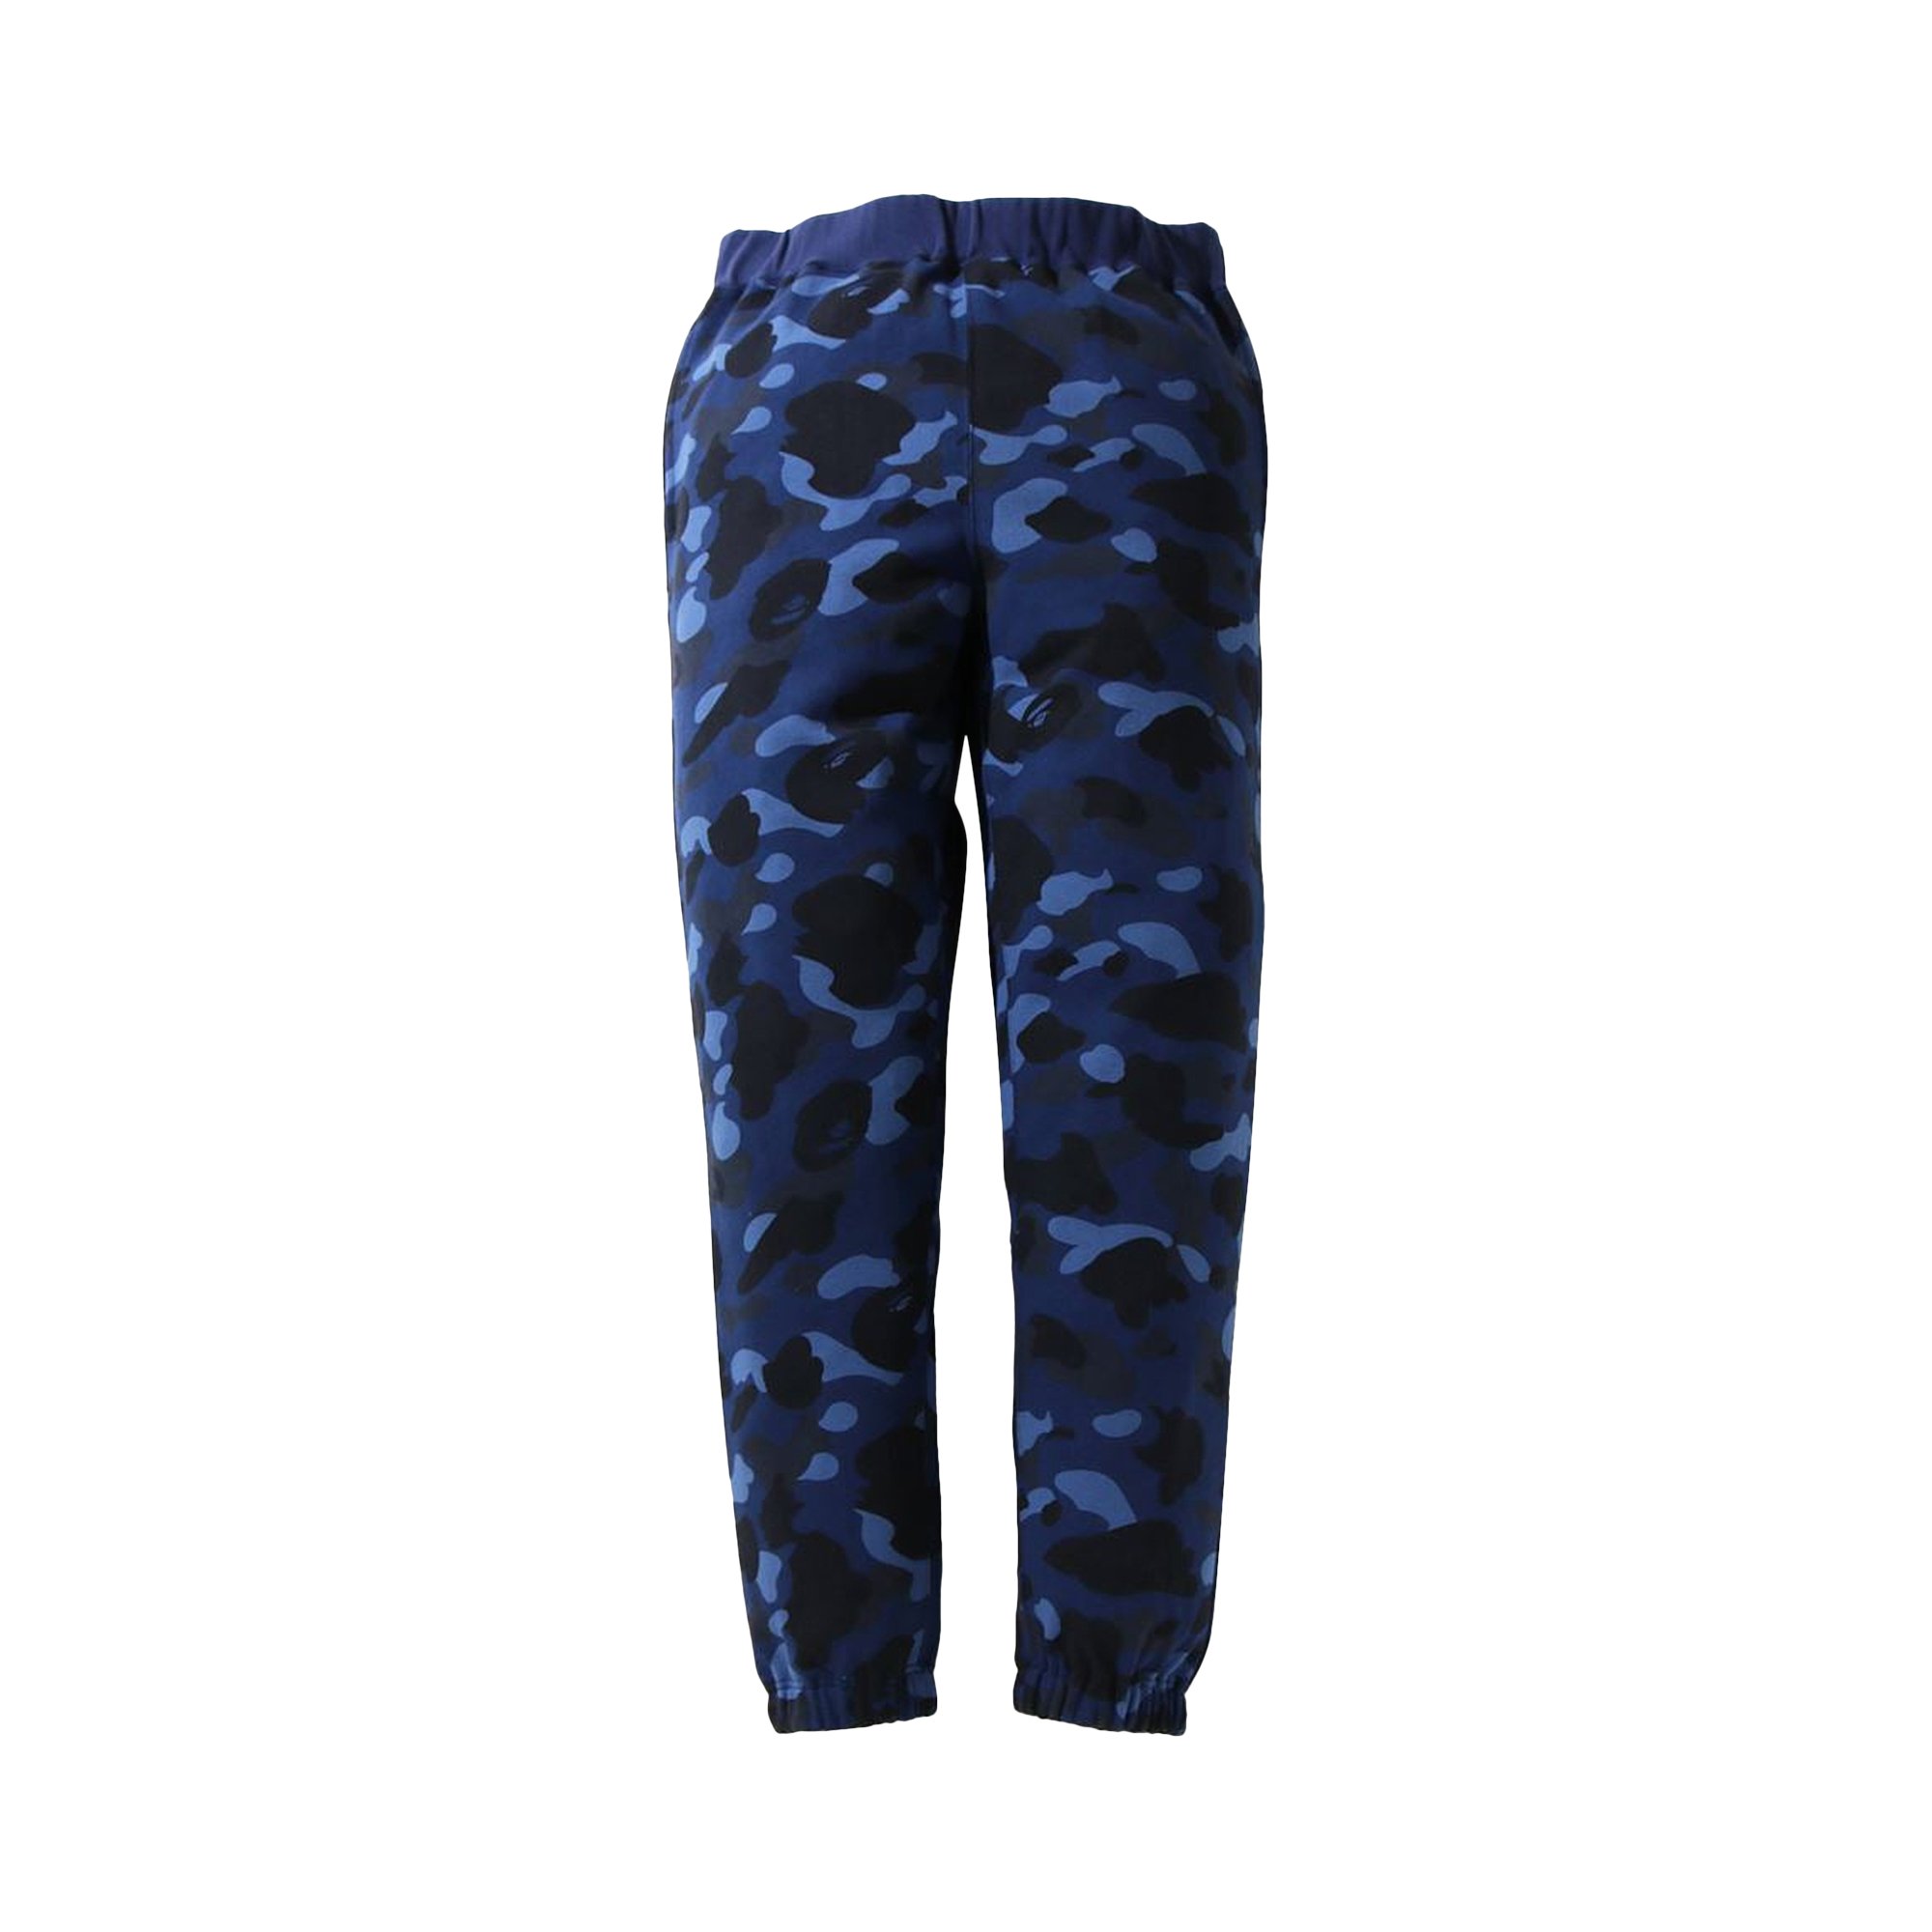 Buy BAPE Color Camo Sweat Pants 'Navy' - 1H25 152 015 NAVY | GOAT